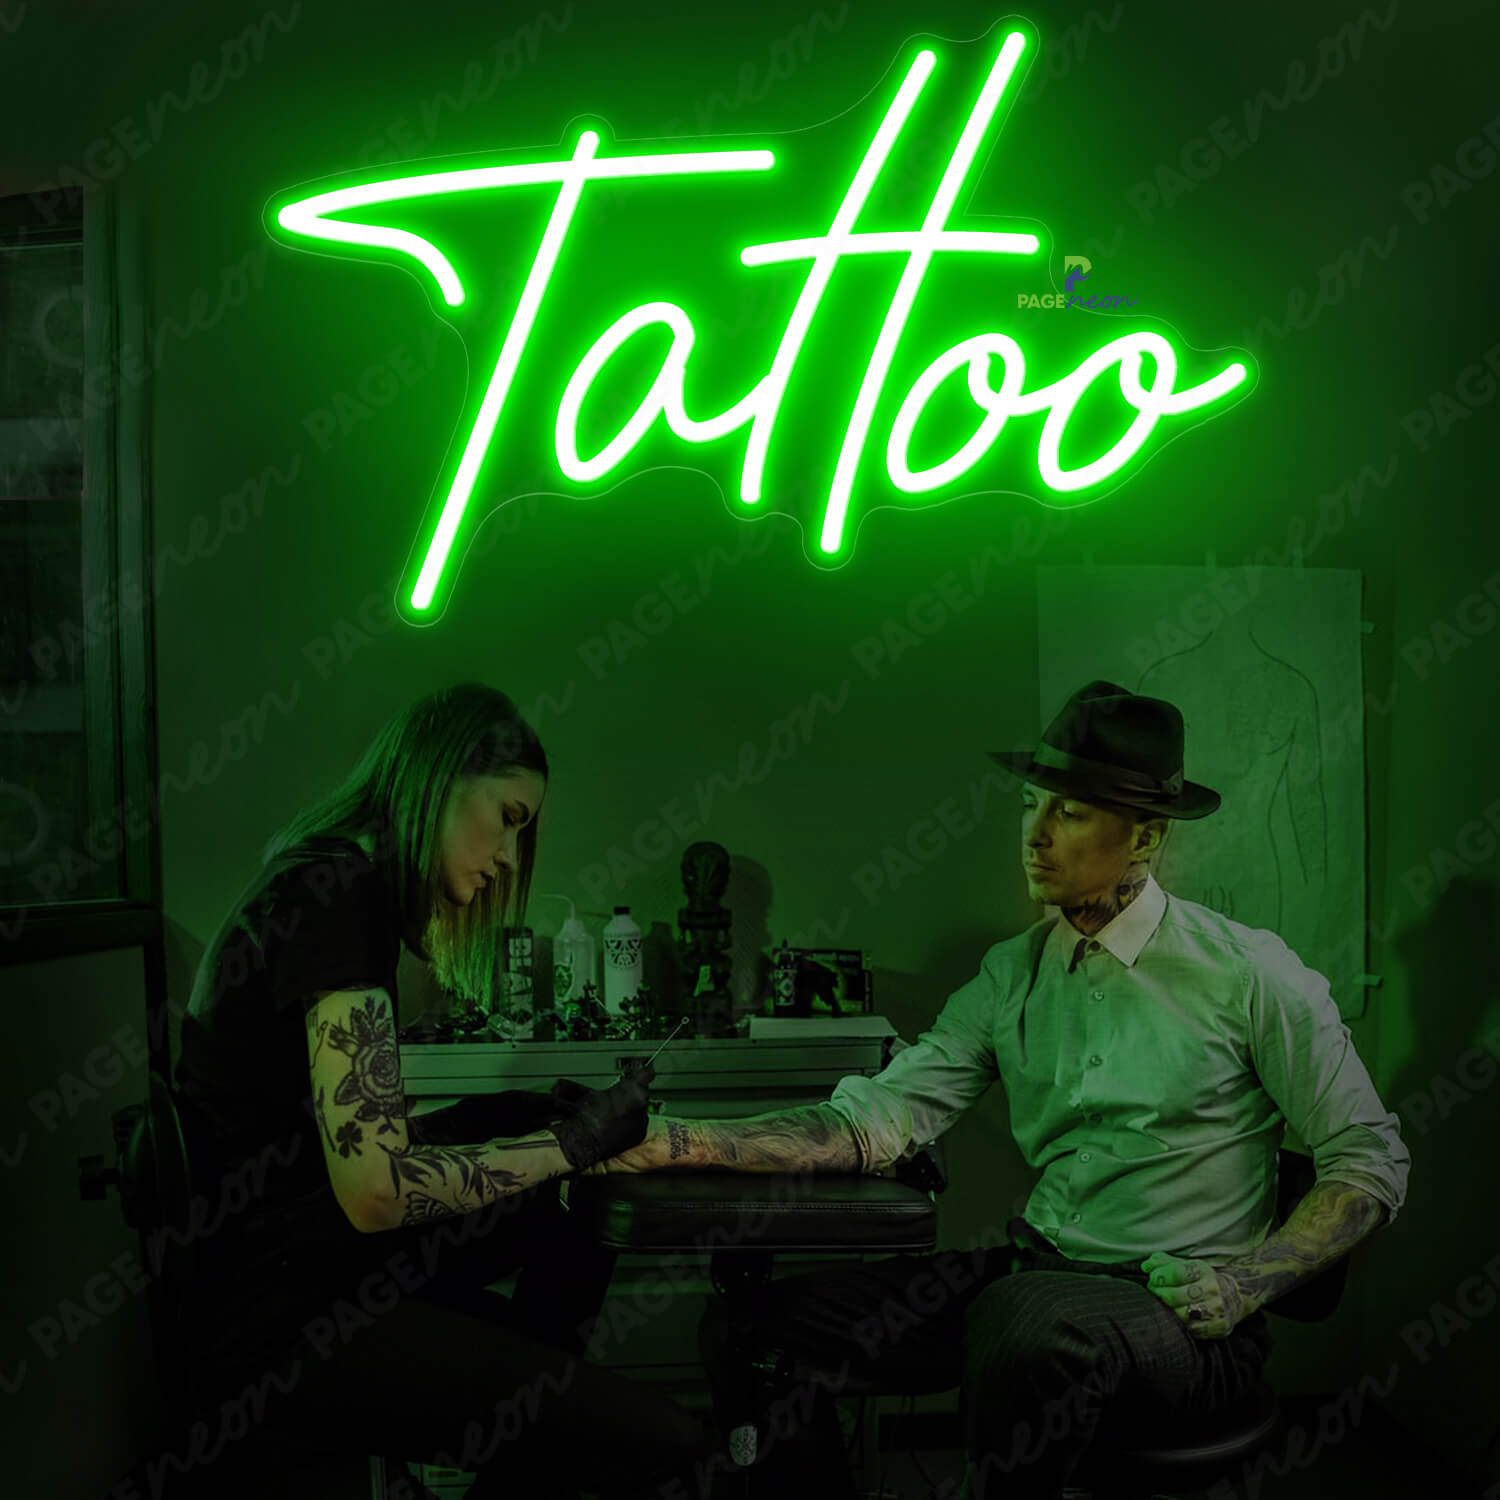 Neon Sign Tattoo Piercing Led Light Green